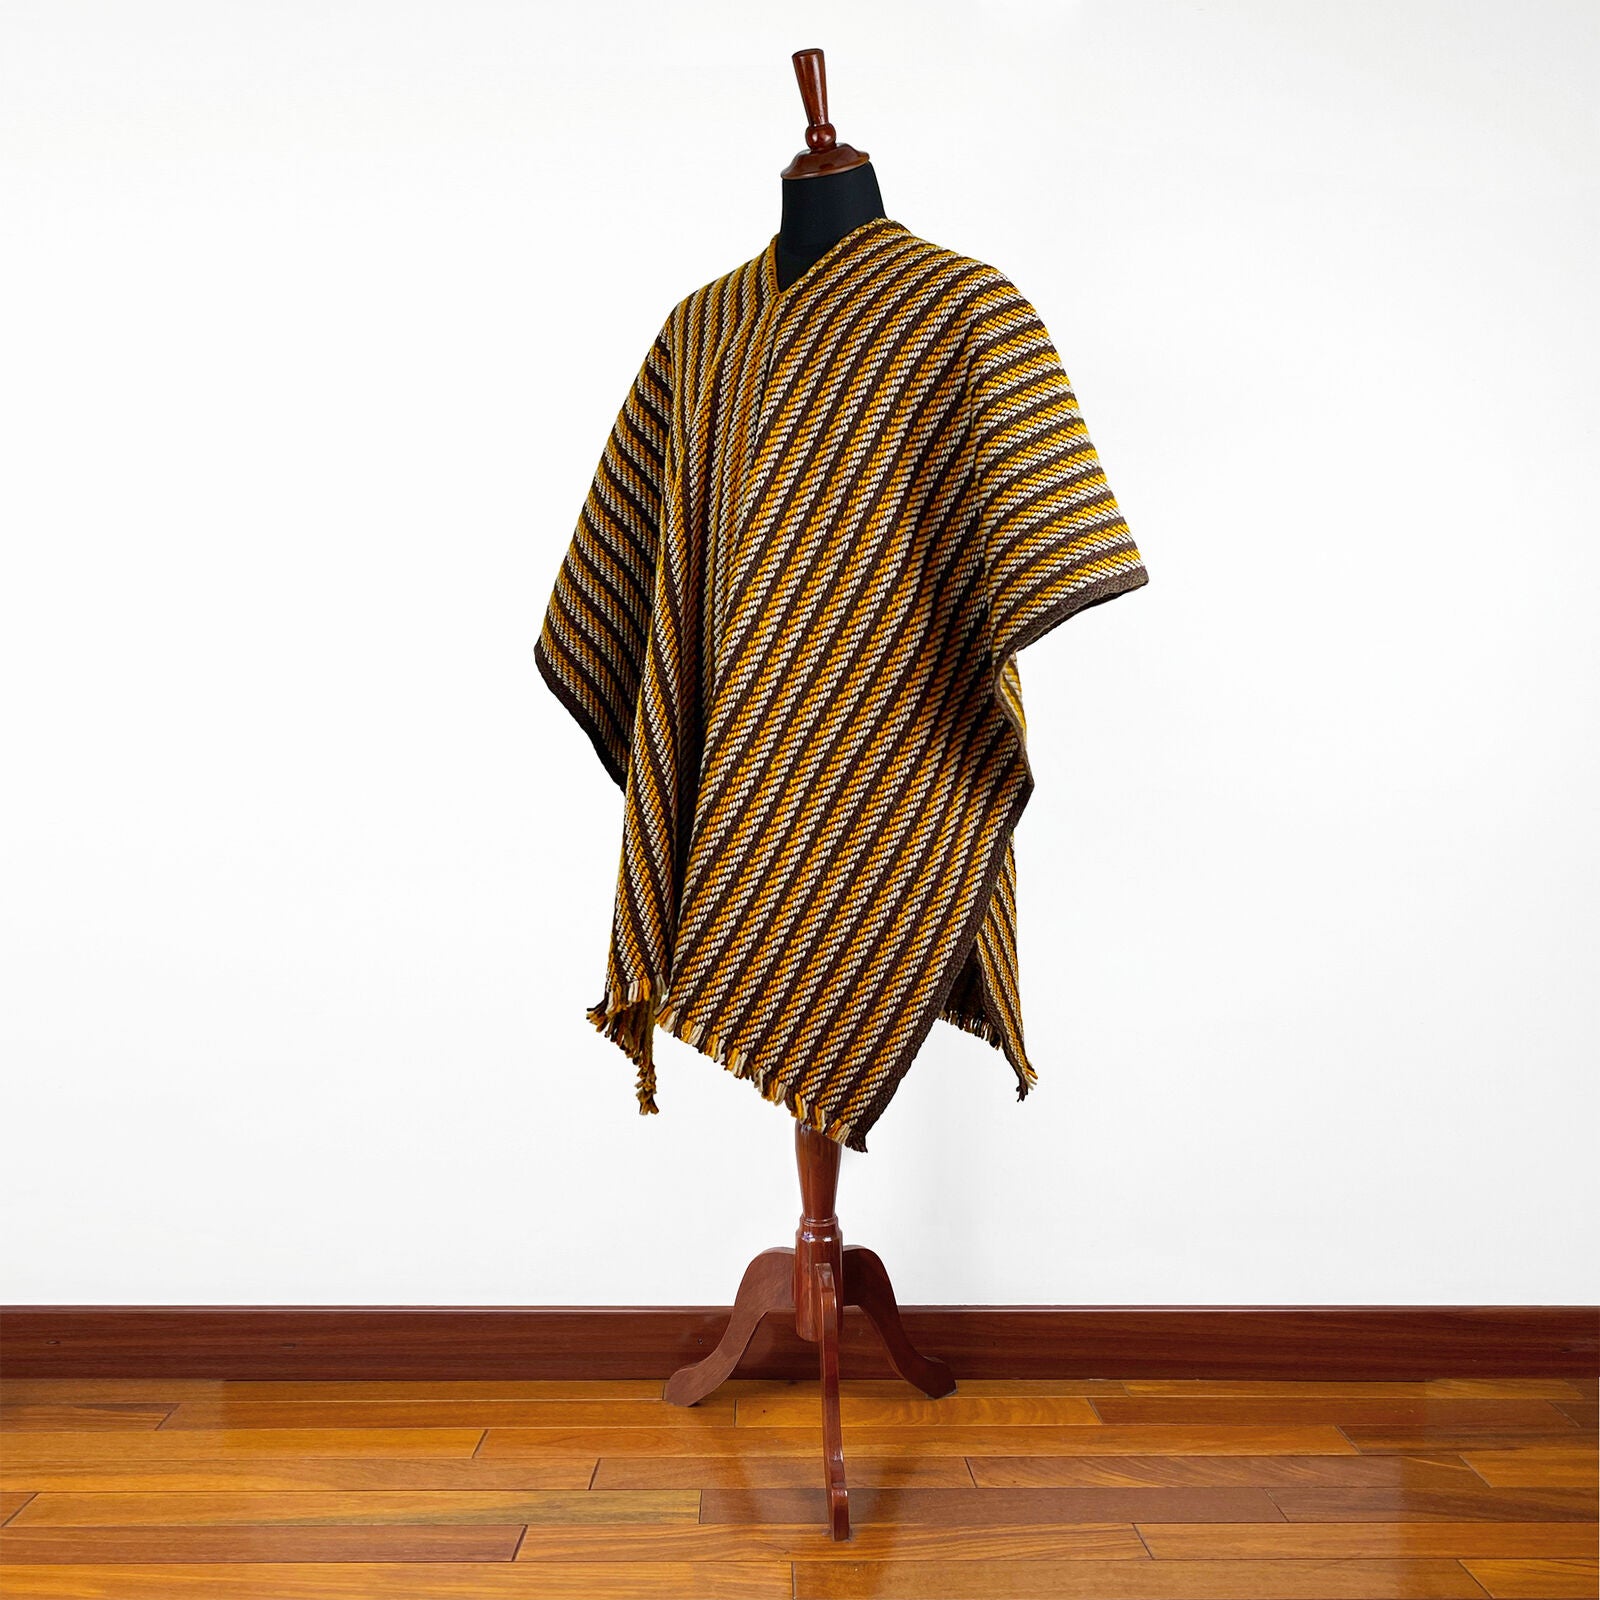 Llama Wool Unisex South American Handwoven Serape Poncho - thin stripes - brown